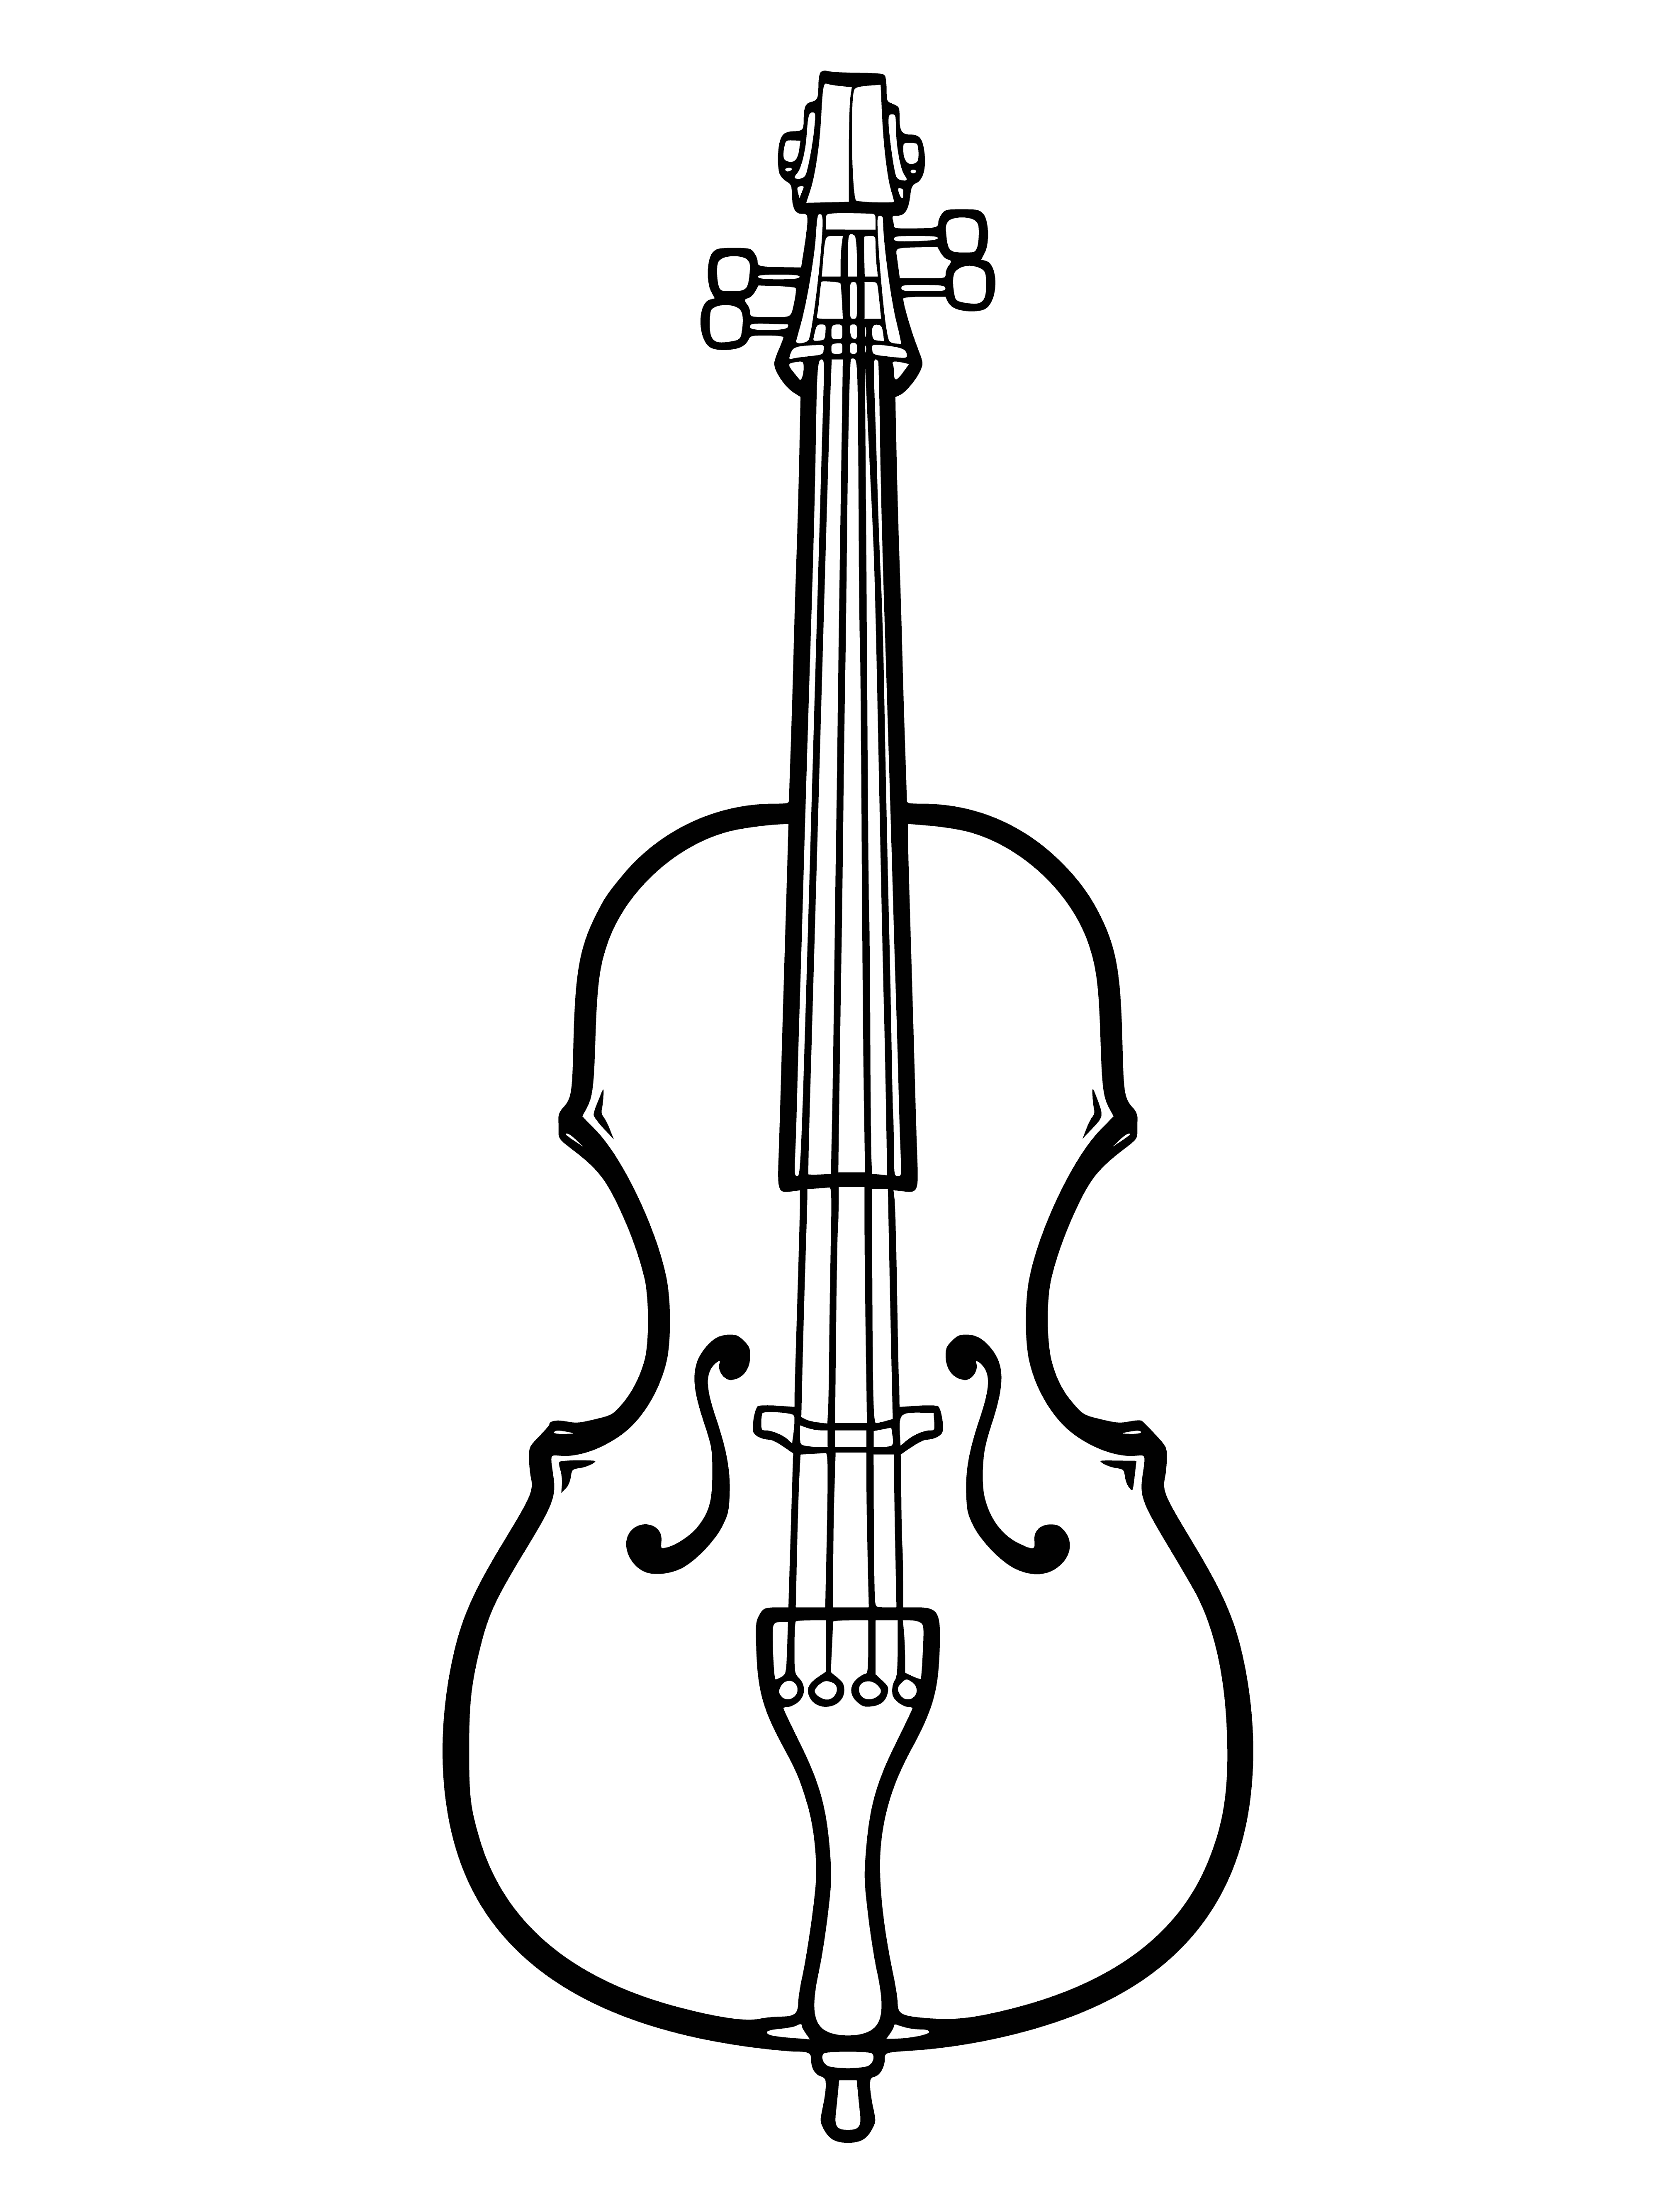 Cello coloring page